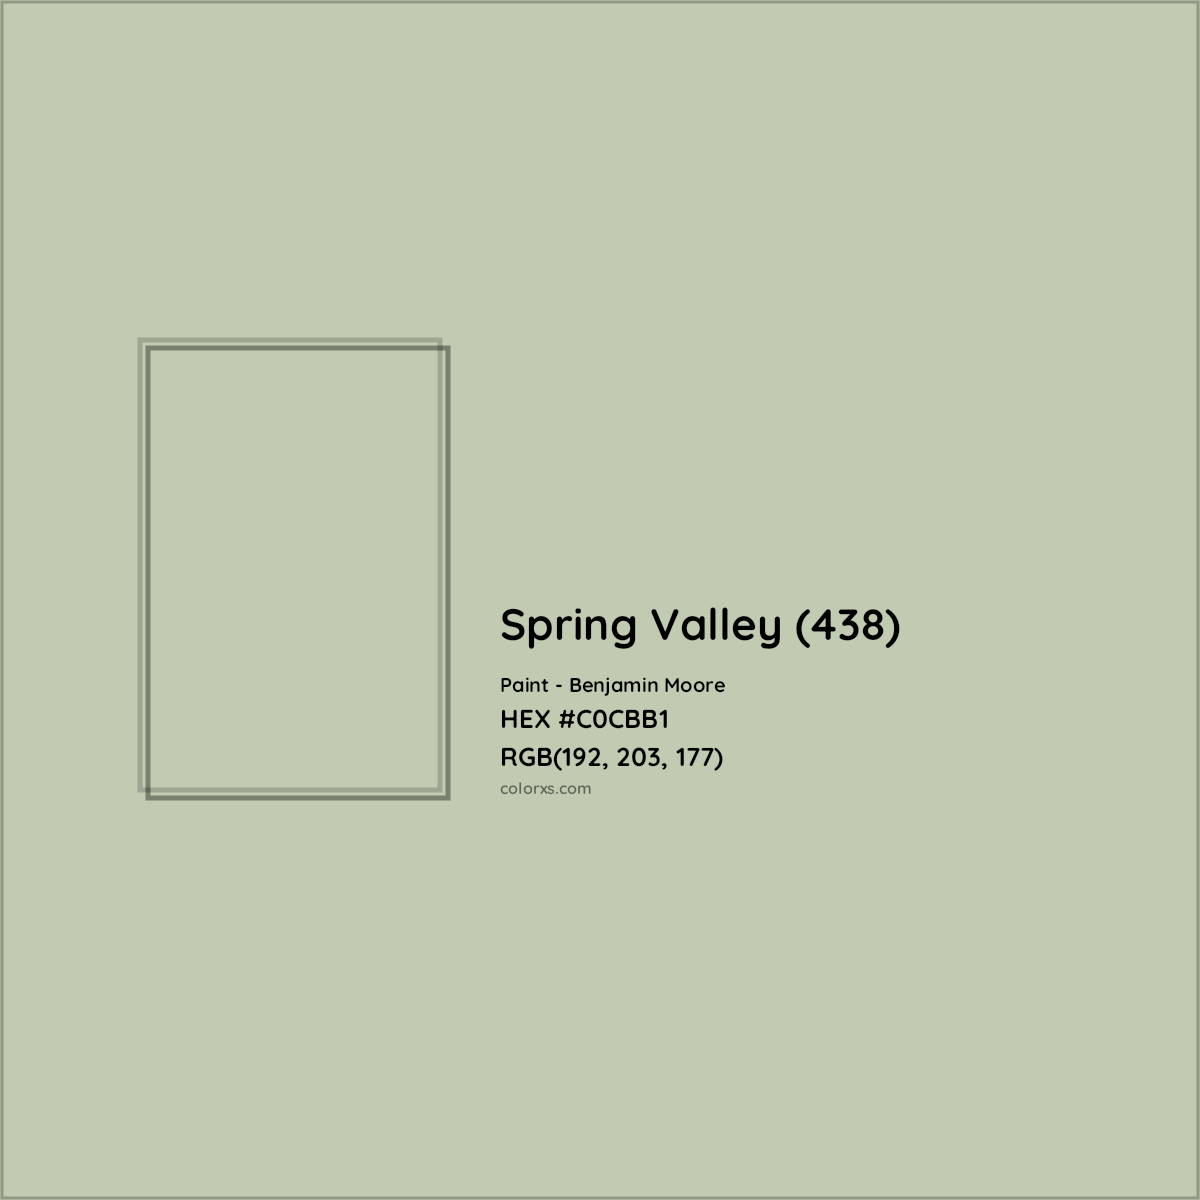 HEX #C0CBB1 Spring Valley (438) Paint Benjamin Moore - Color Code